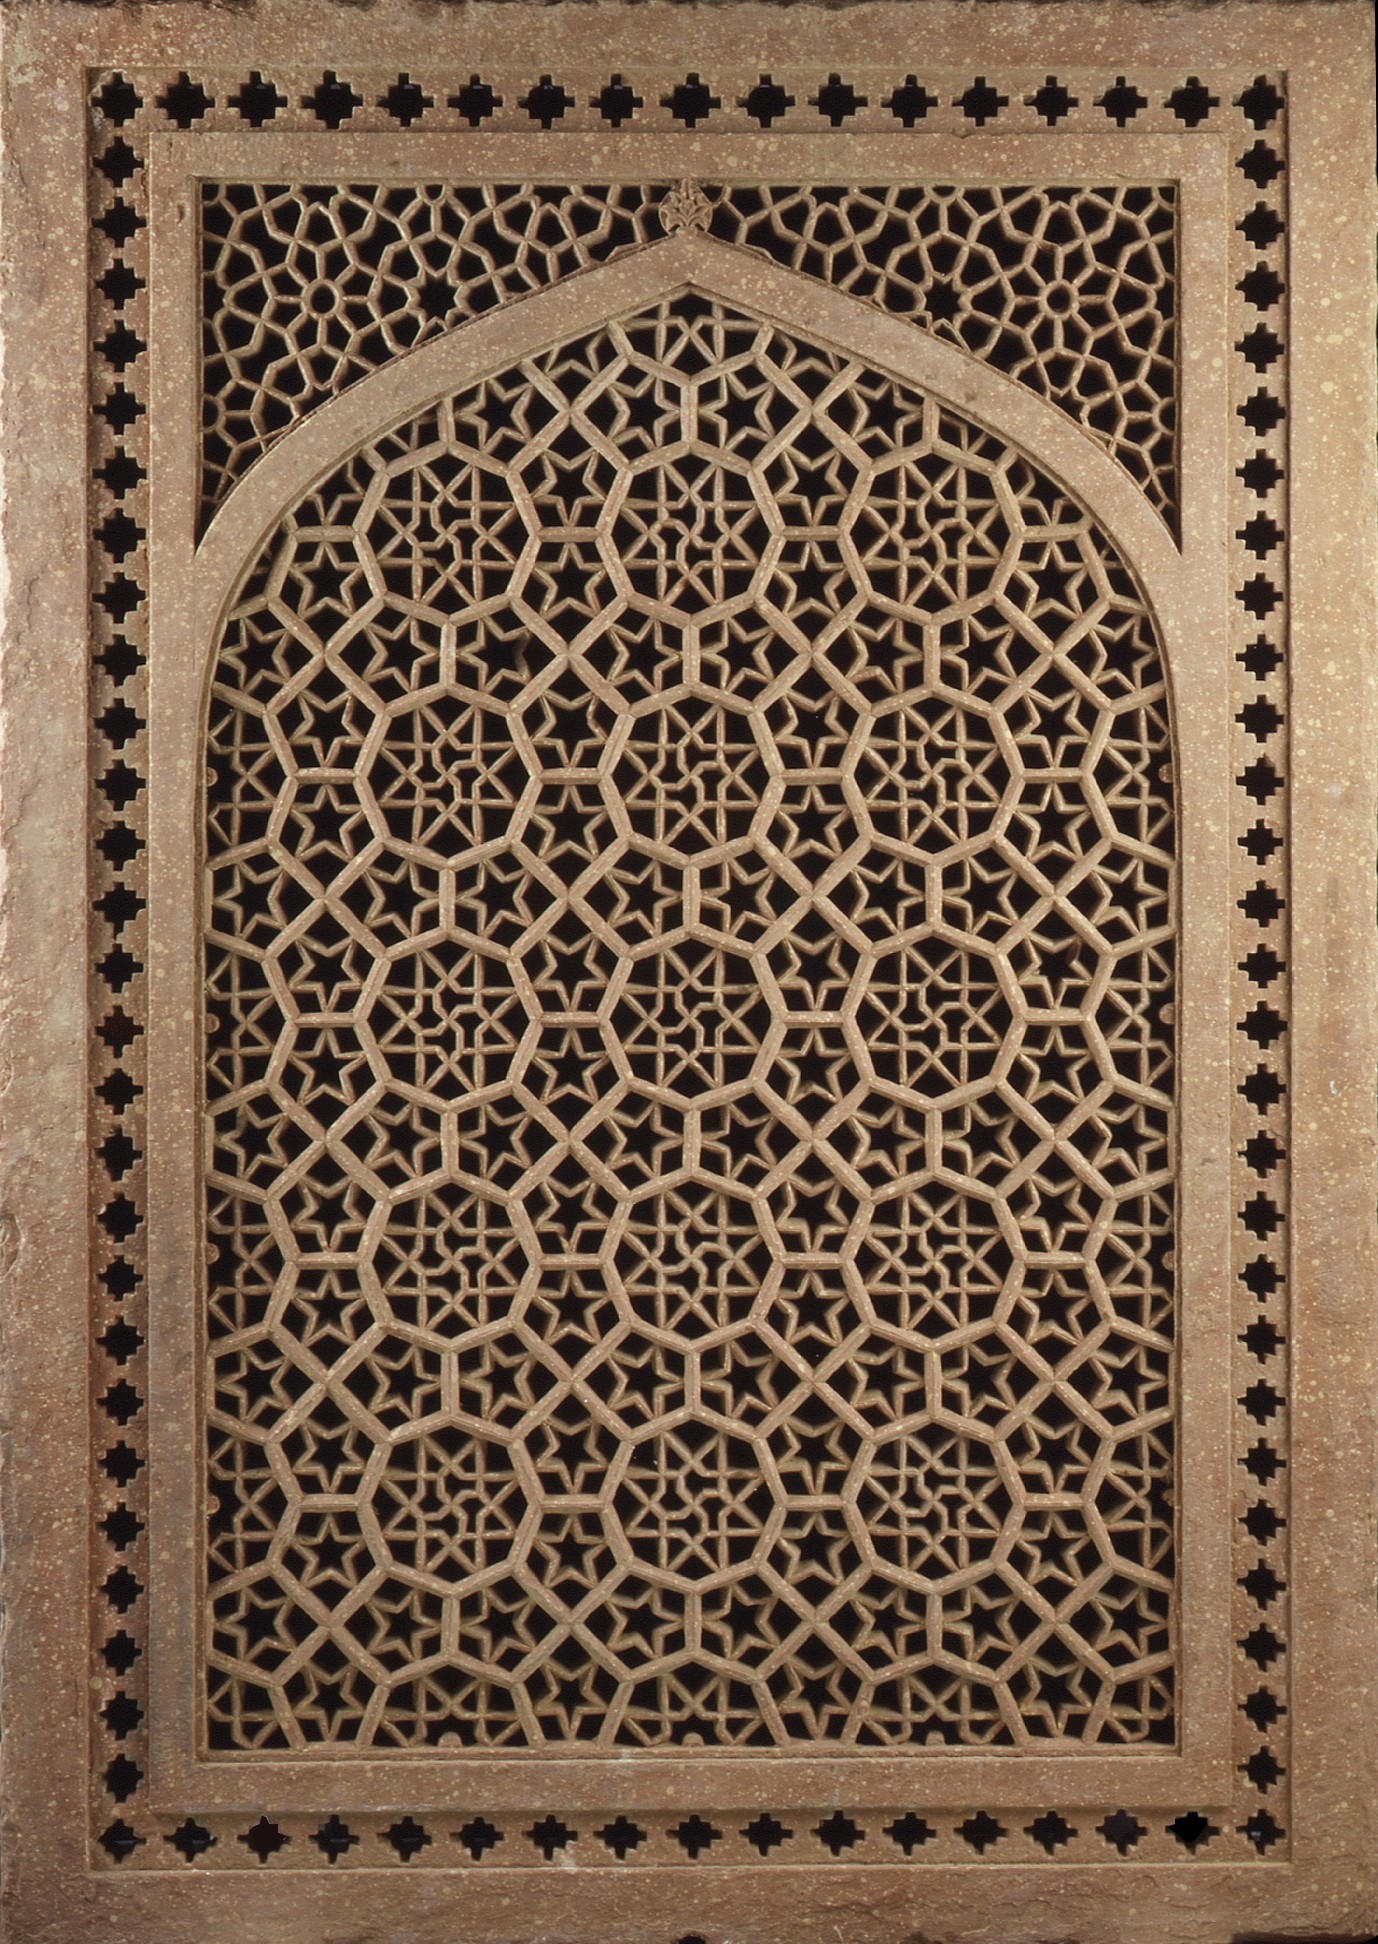 Islamic Geometric Art